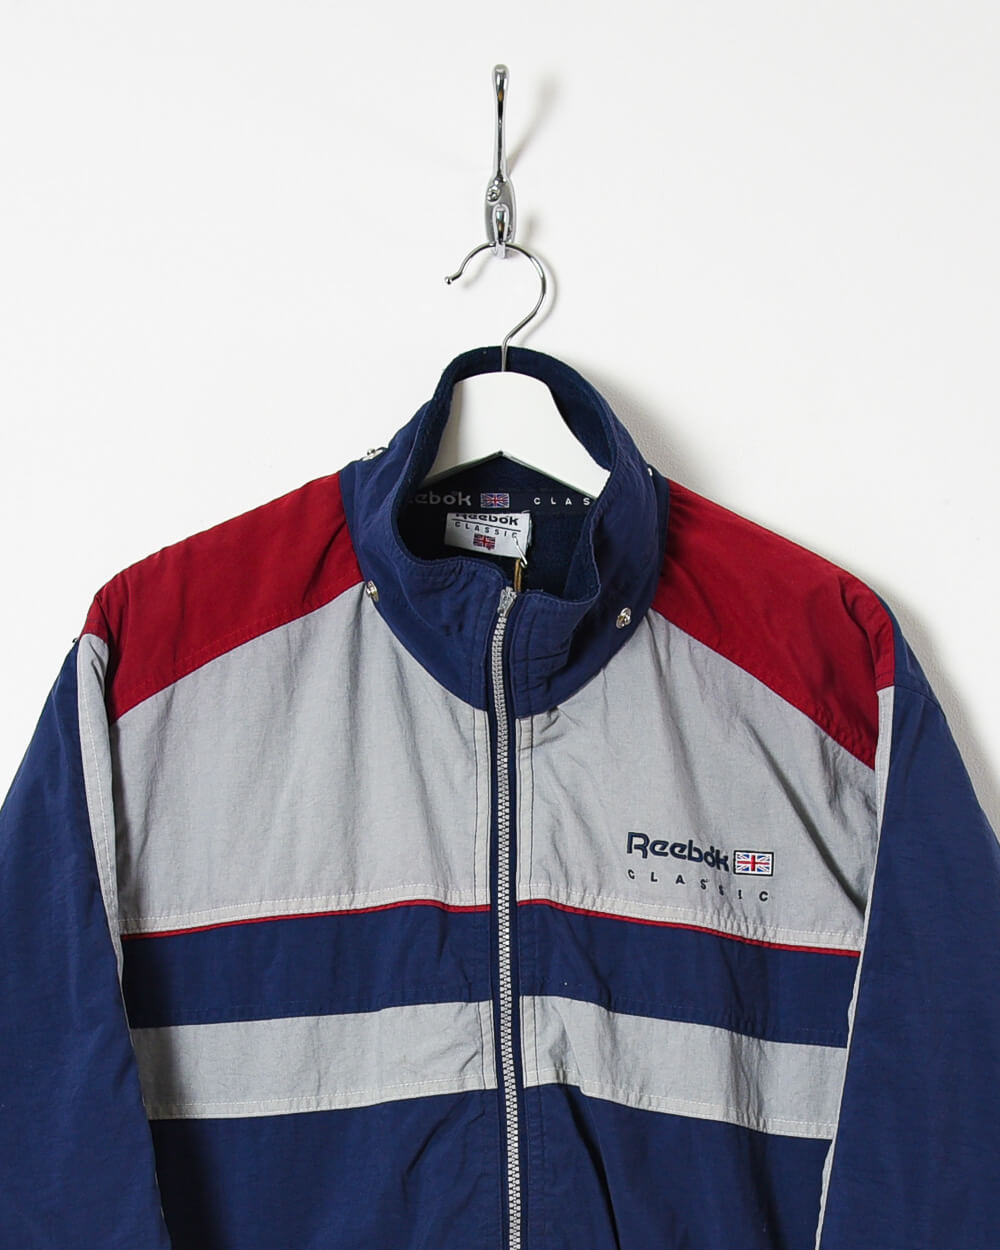 Reebok Classic Fleece Lined Windbreaker Jacket - Large - Domno Vintage 90s, 80s, 00s Retro and Vintage Clothing 